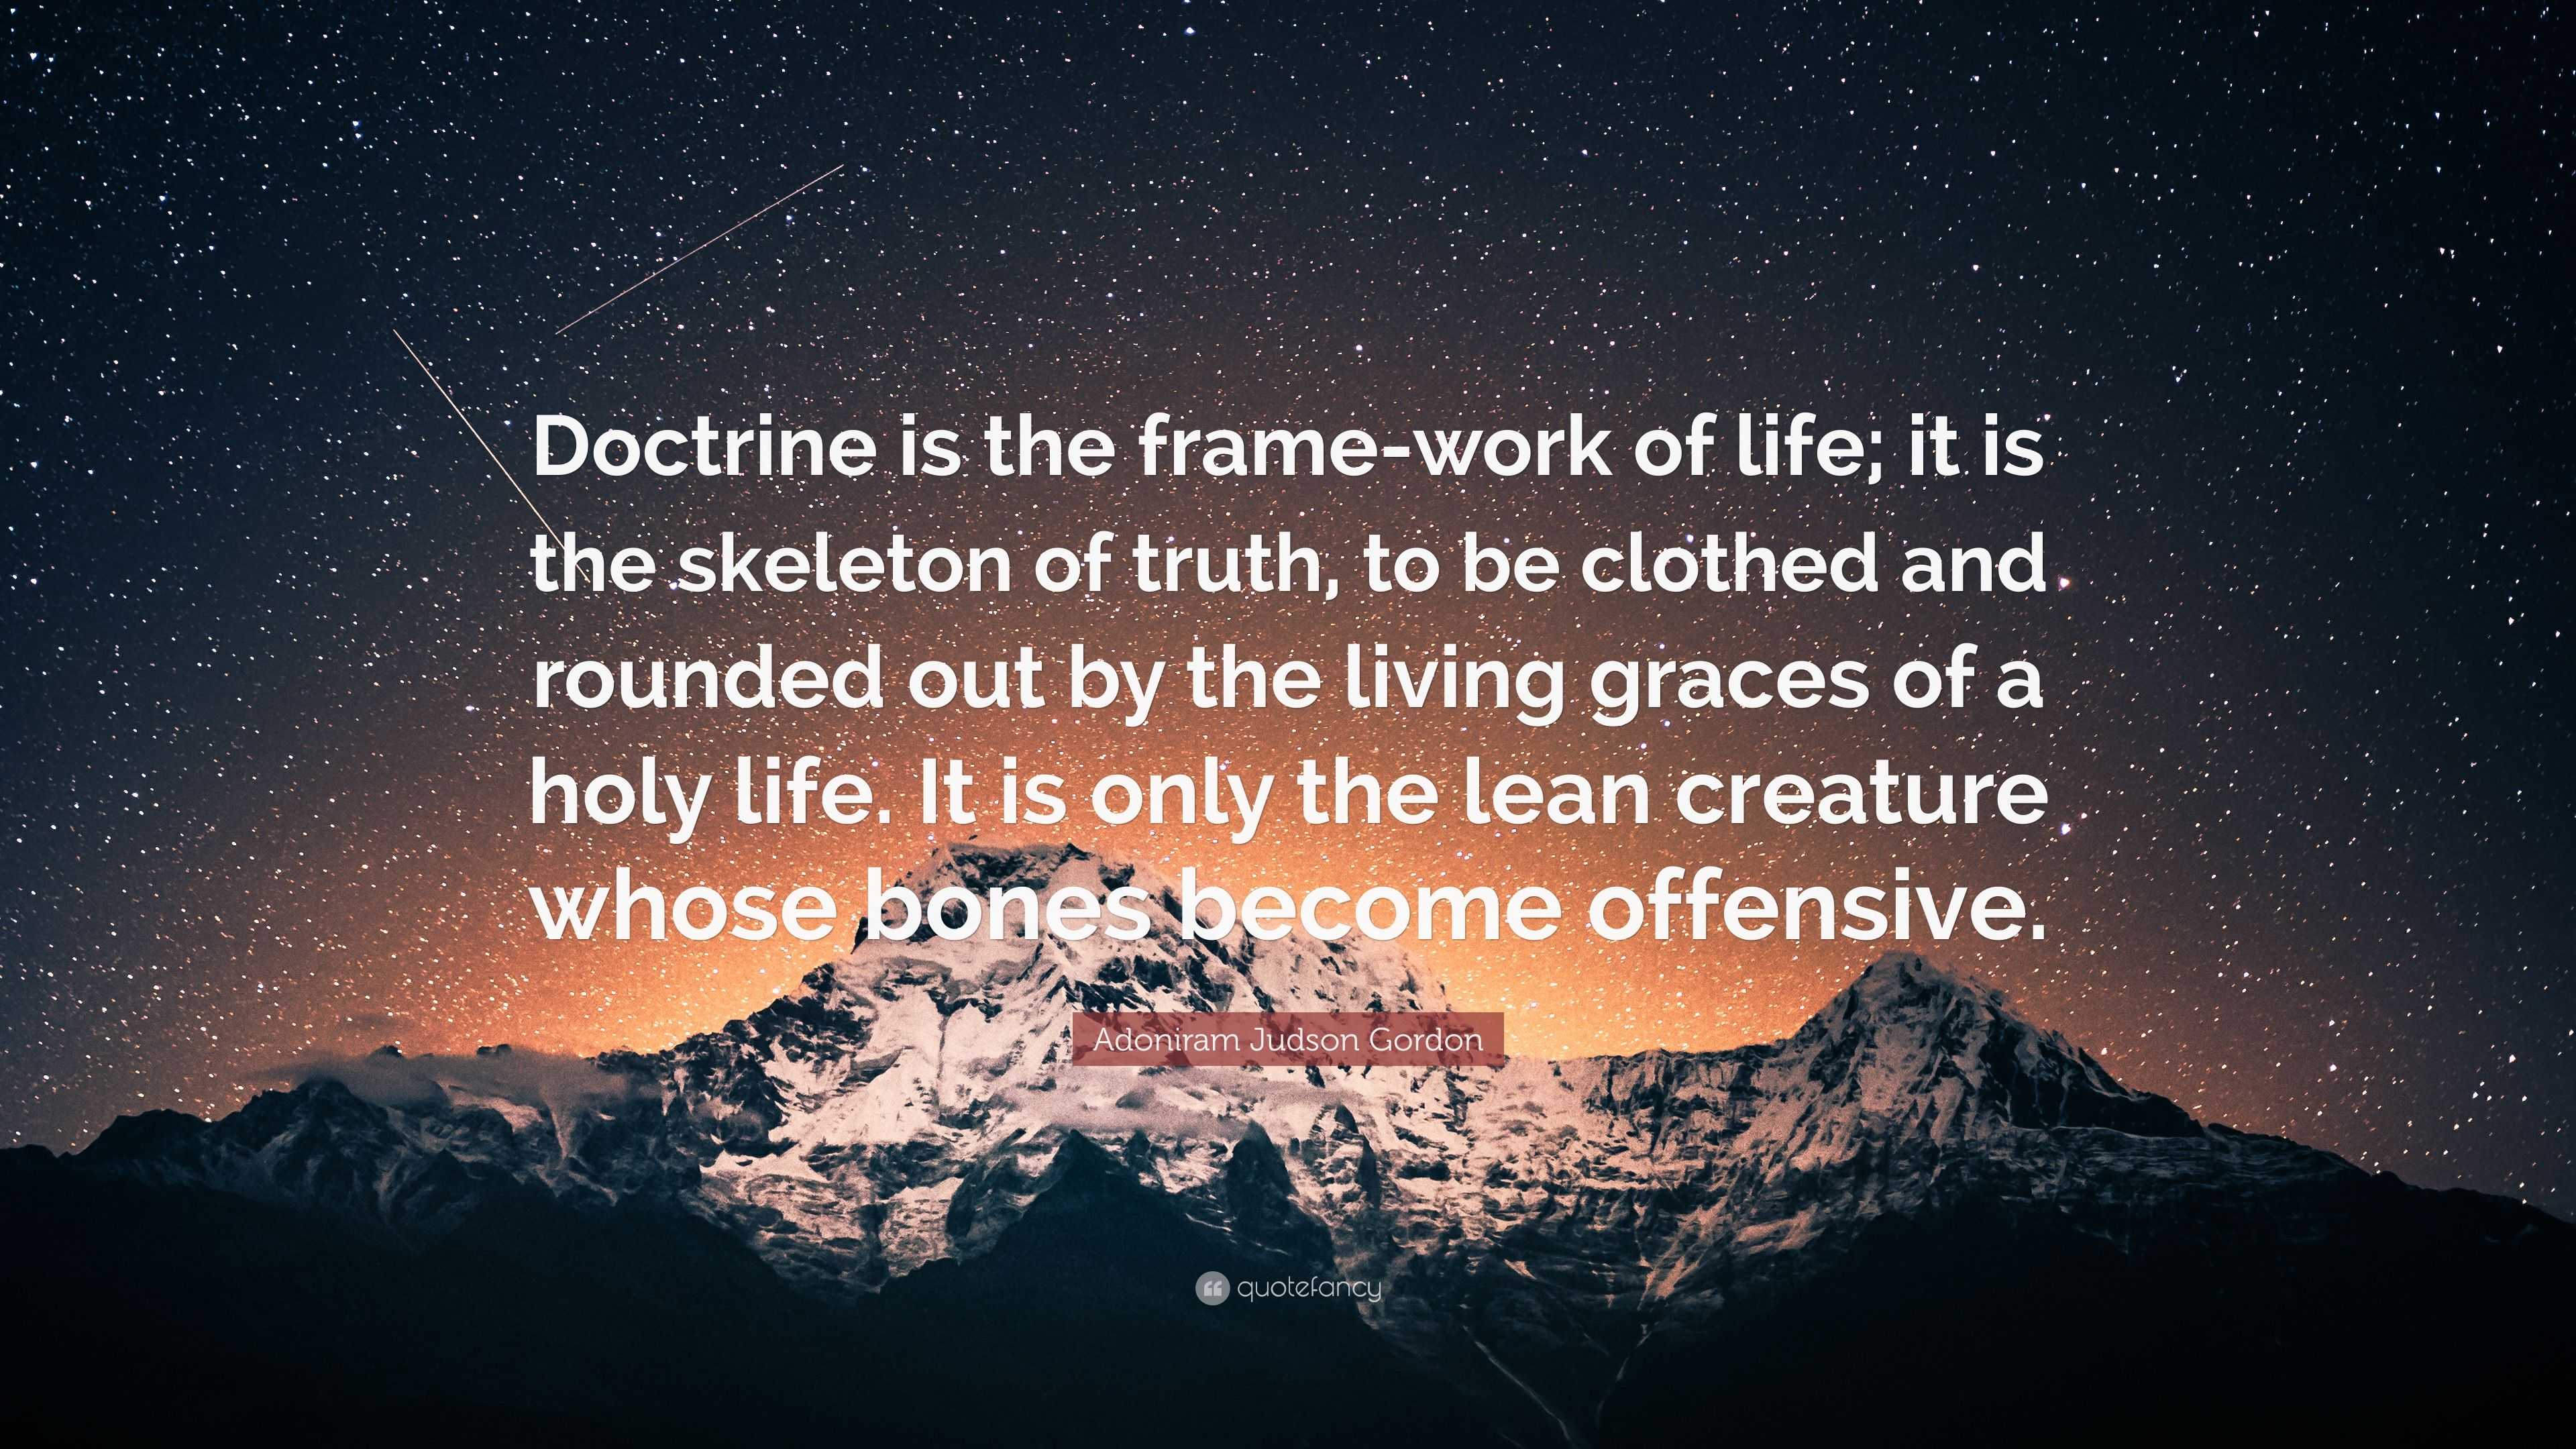 Adoniram Judson Gordon Quote “Doctrine is the frame work of life it